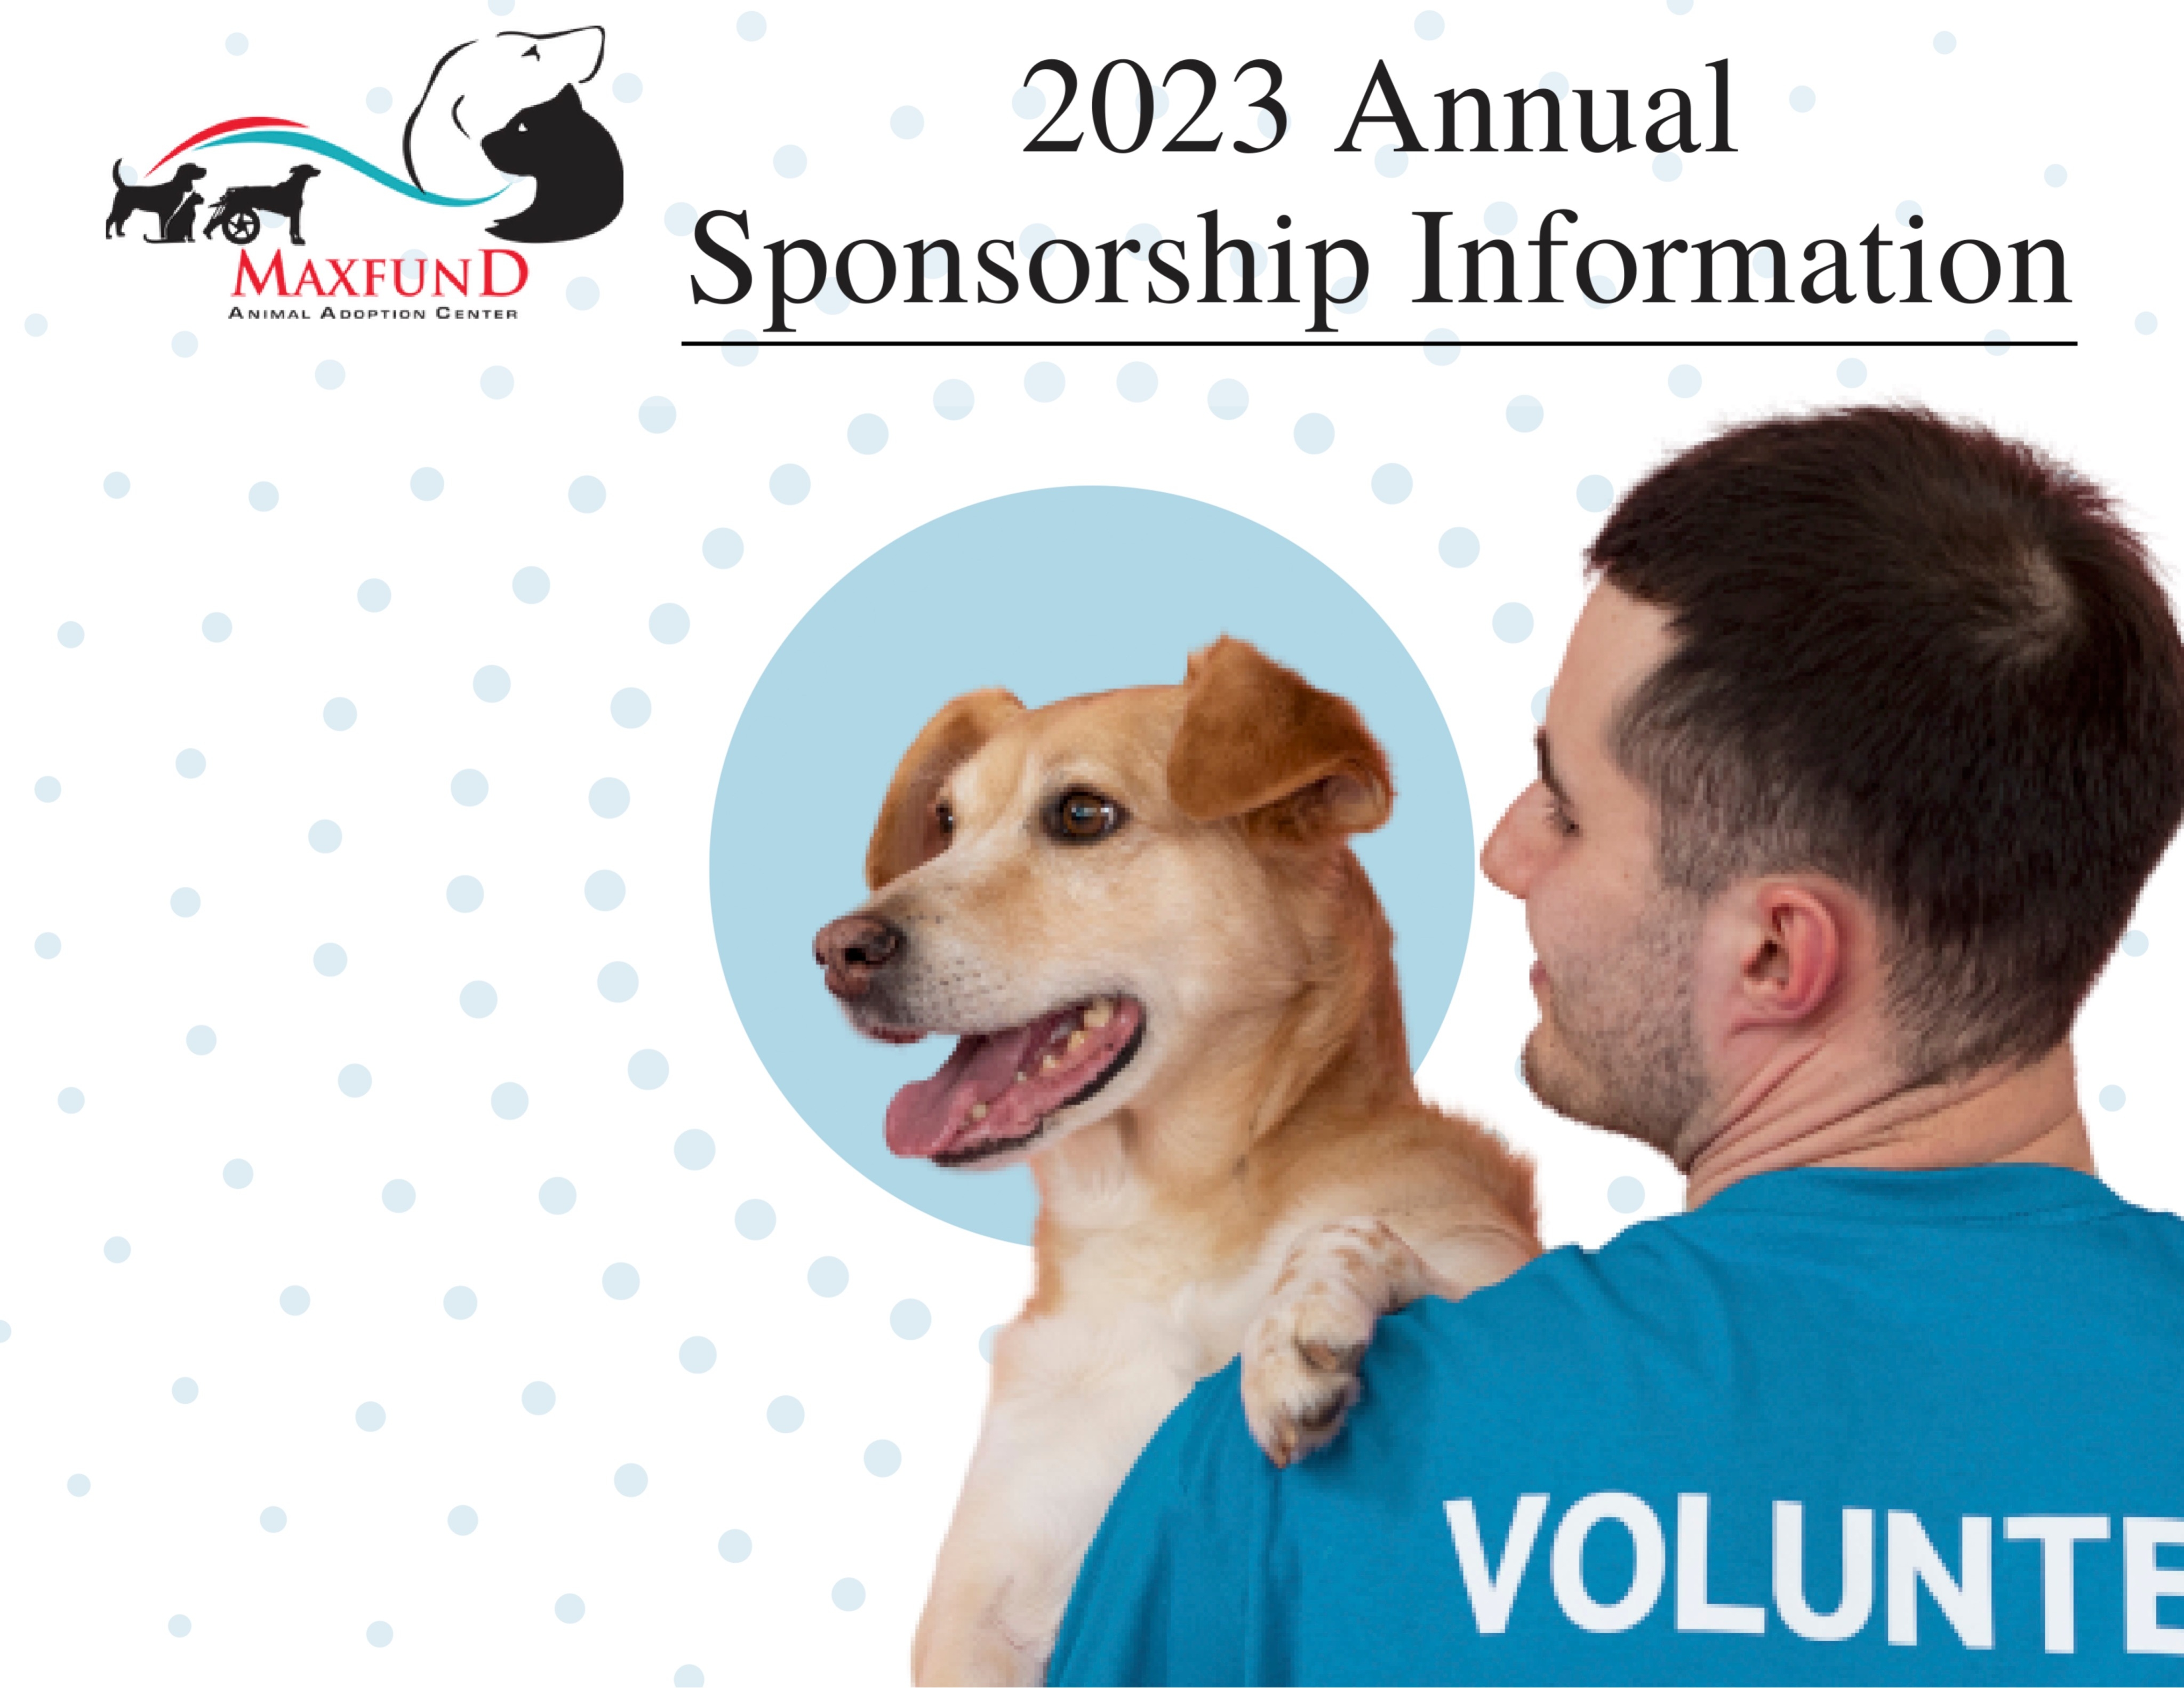 
2023 Annual Sponsorship Information